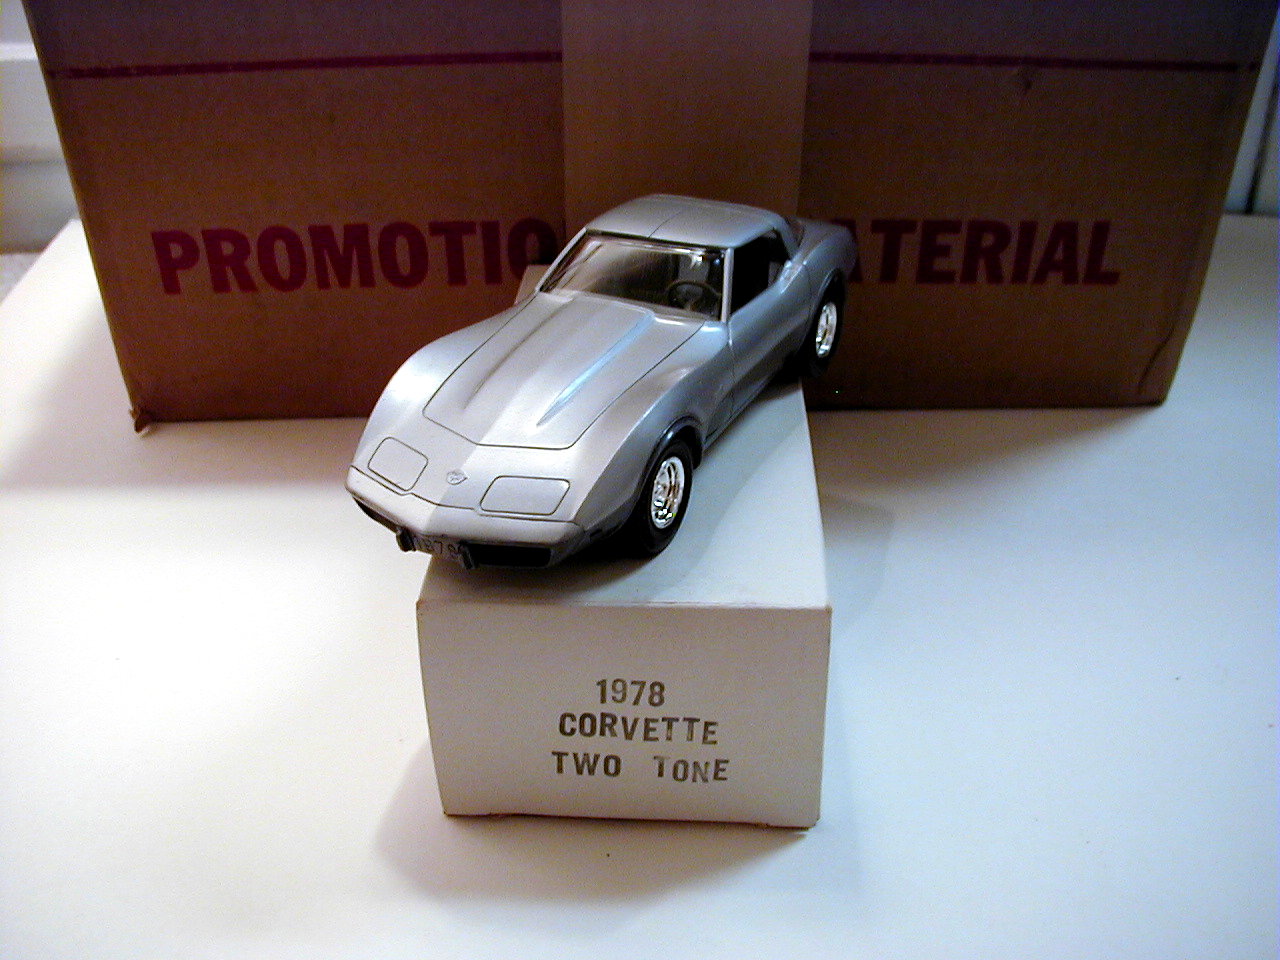 Corvette 1978 Promo Model From GM - Click Image to Close